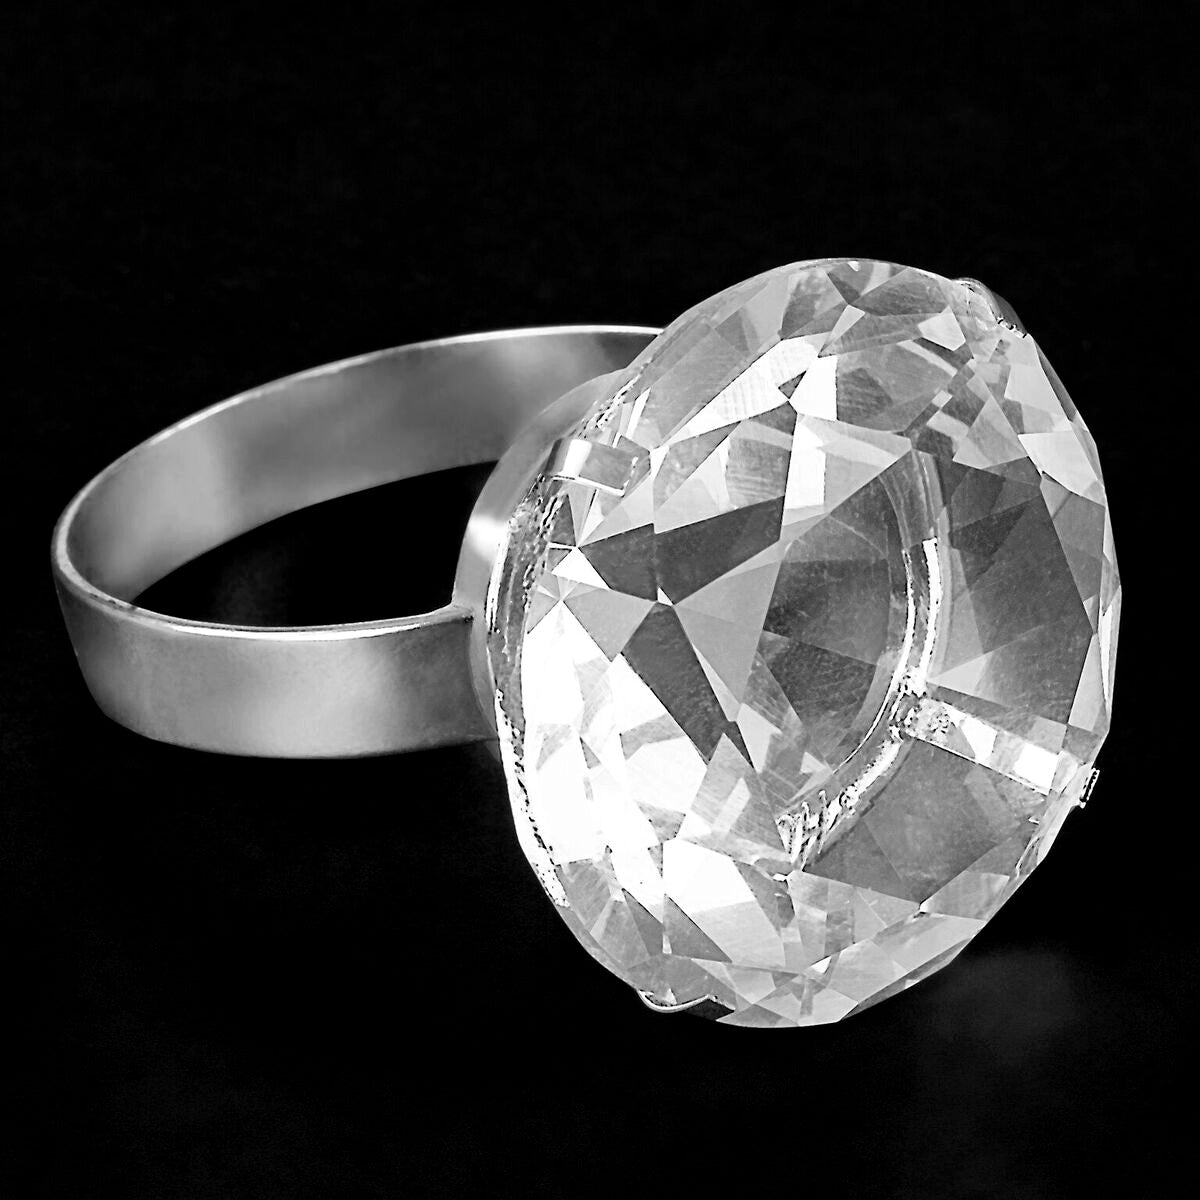 10 pc/pk Diamond Ring Napkin Rings Holder - Silver